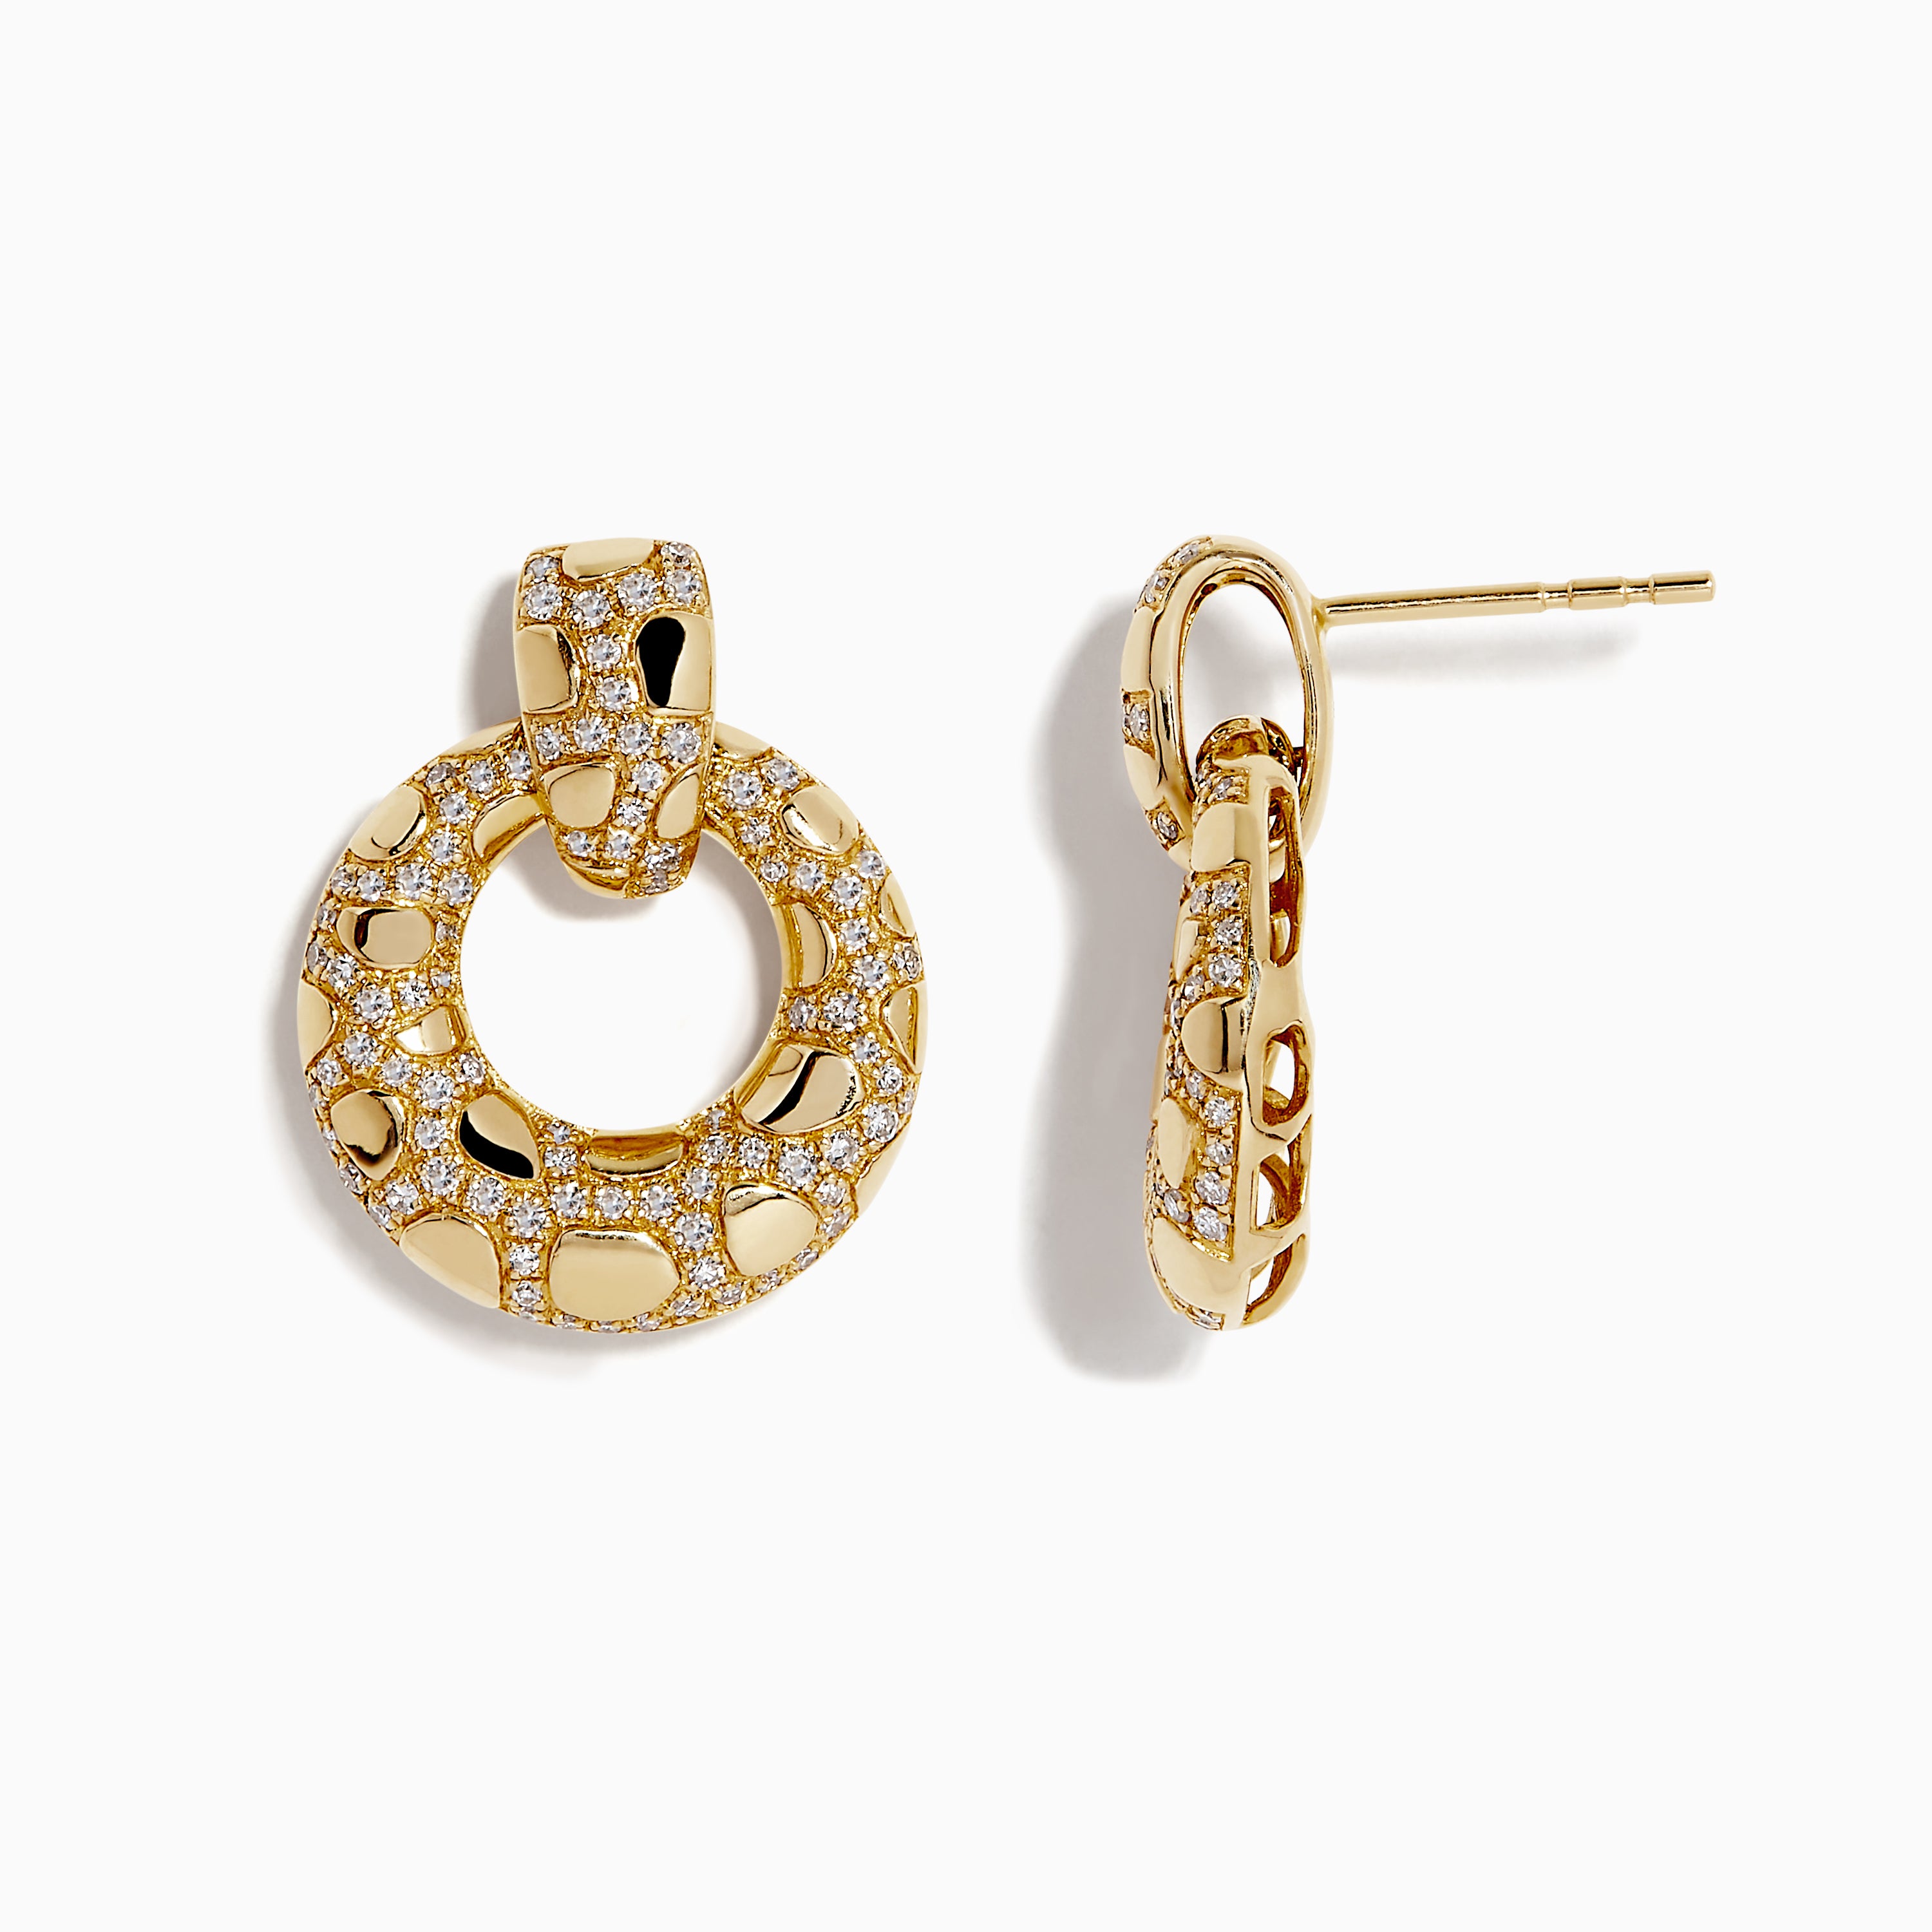 Effy D'Oro 14K Yellow Gold Diamond Pave Pebble Earrings, 0.73 TCW